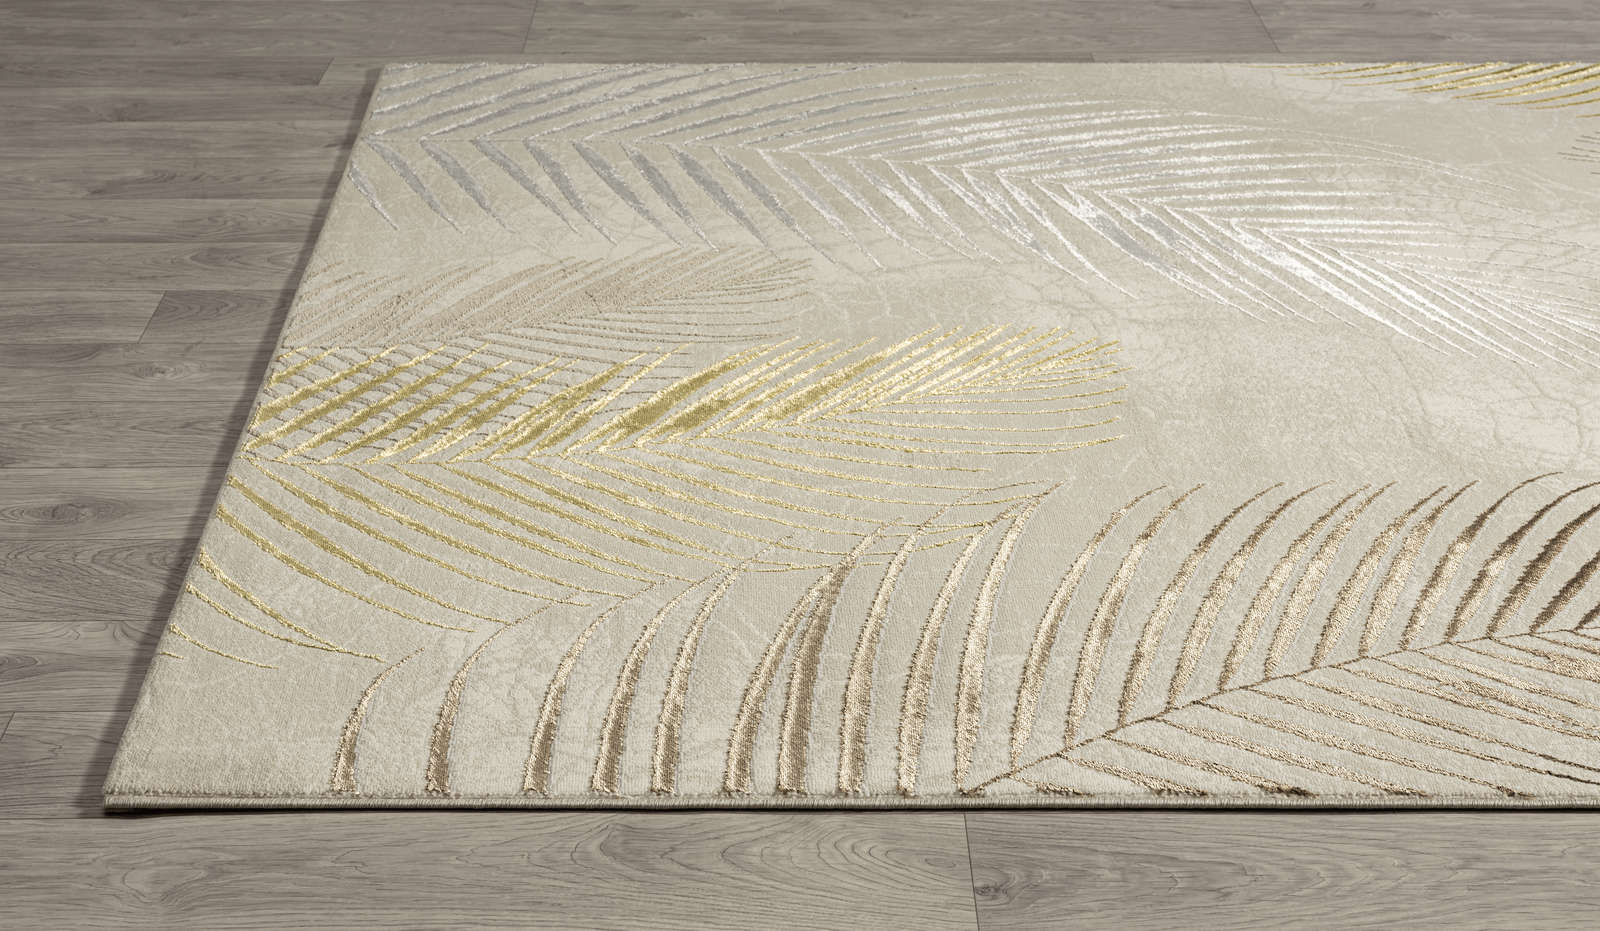             soft cream high pile carpet - 150 x 80 cm
        